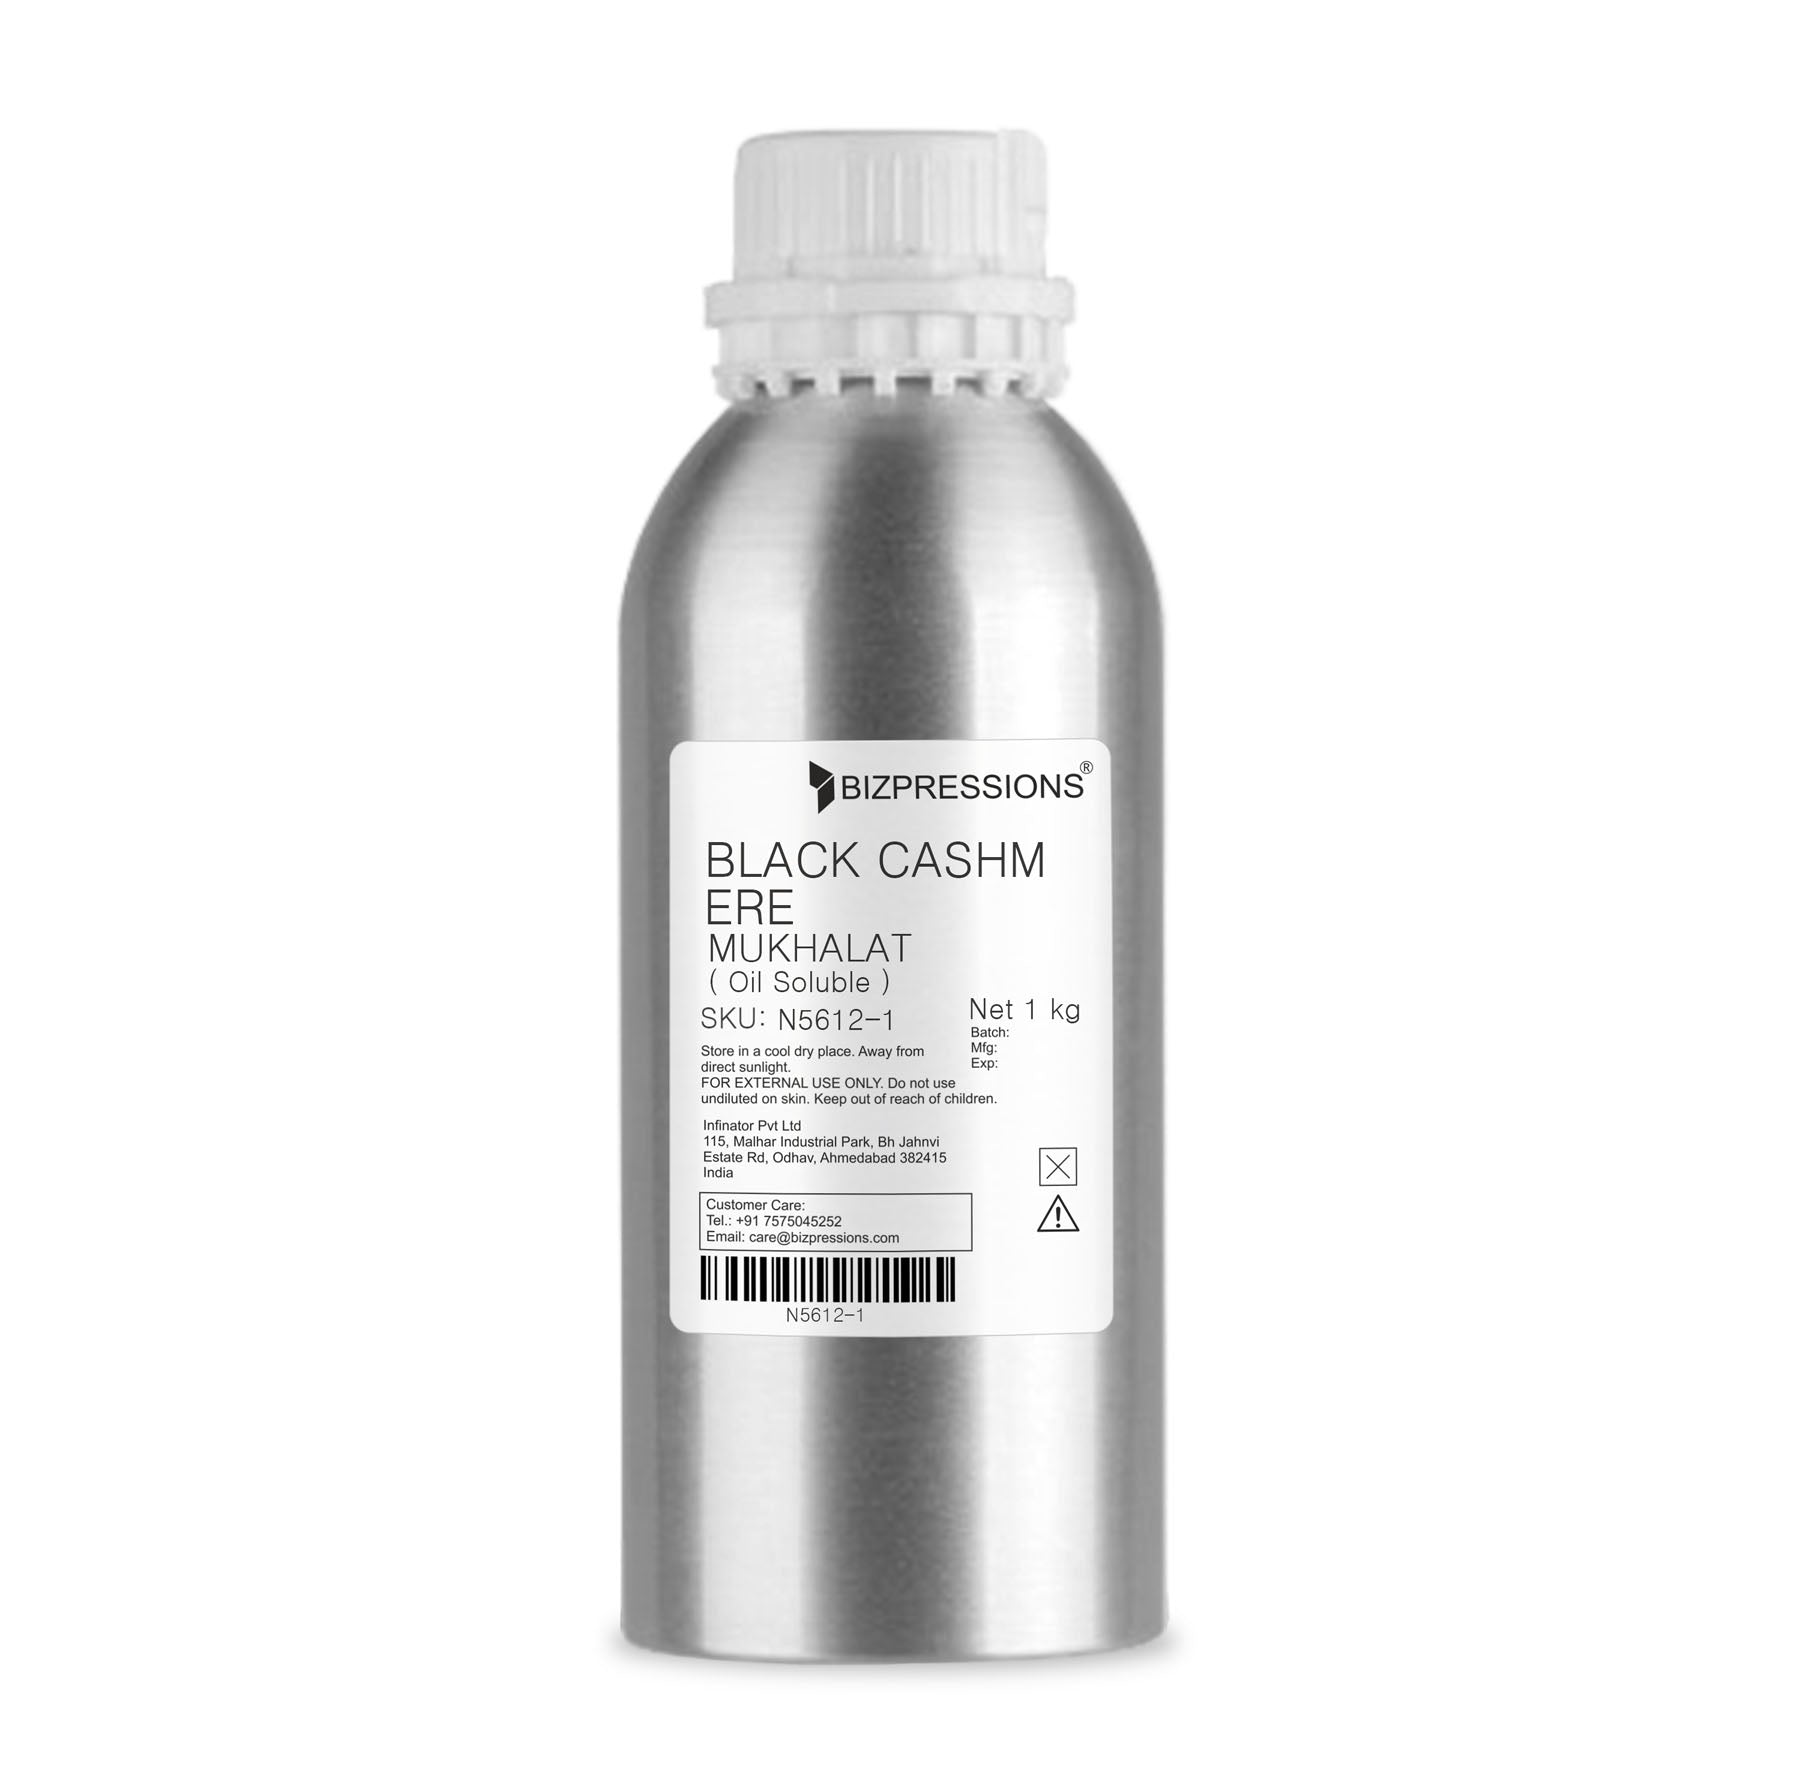 BLACK CASHMERE MUKHALAT - Fragrance ( Oil Soluble ) - 1 kg